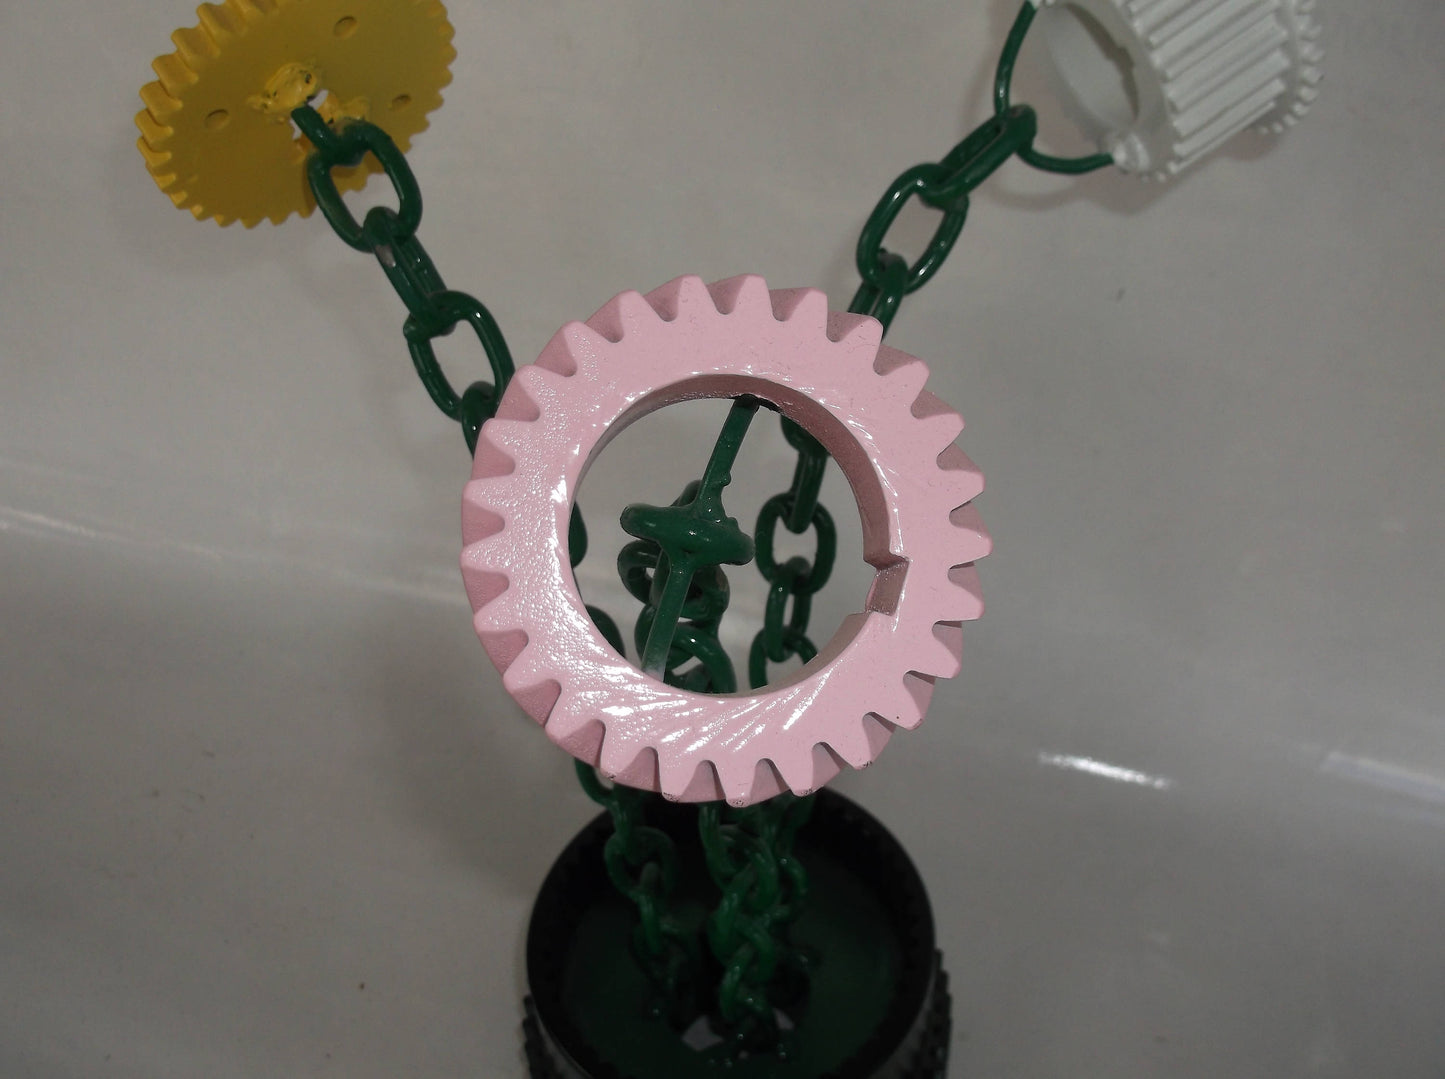 Floral Sculpture, Welded Metal Gears, Flower Arrangement. up cycled art